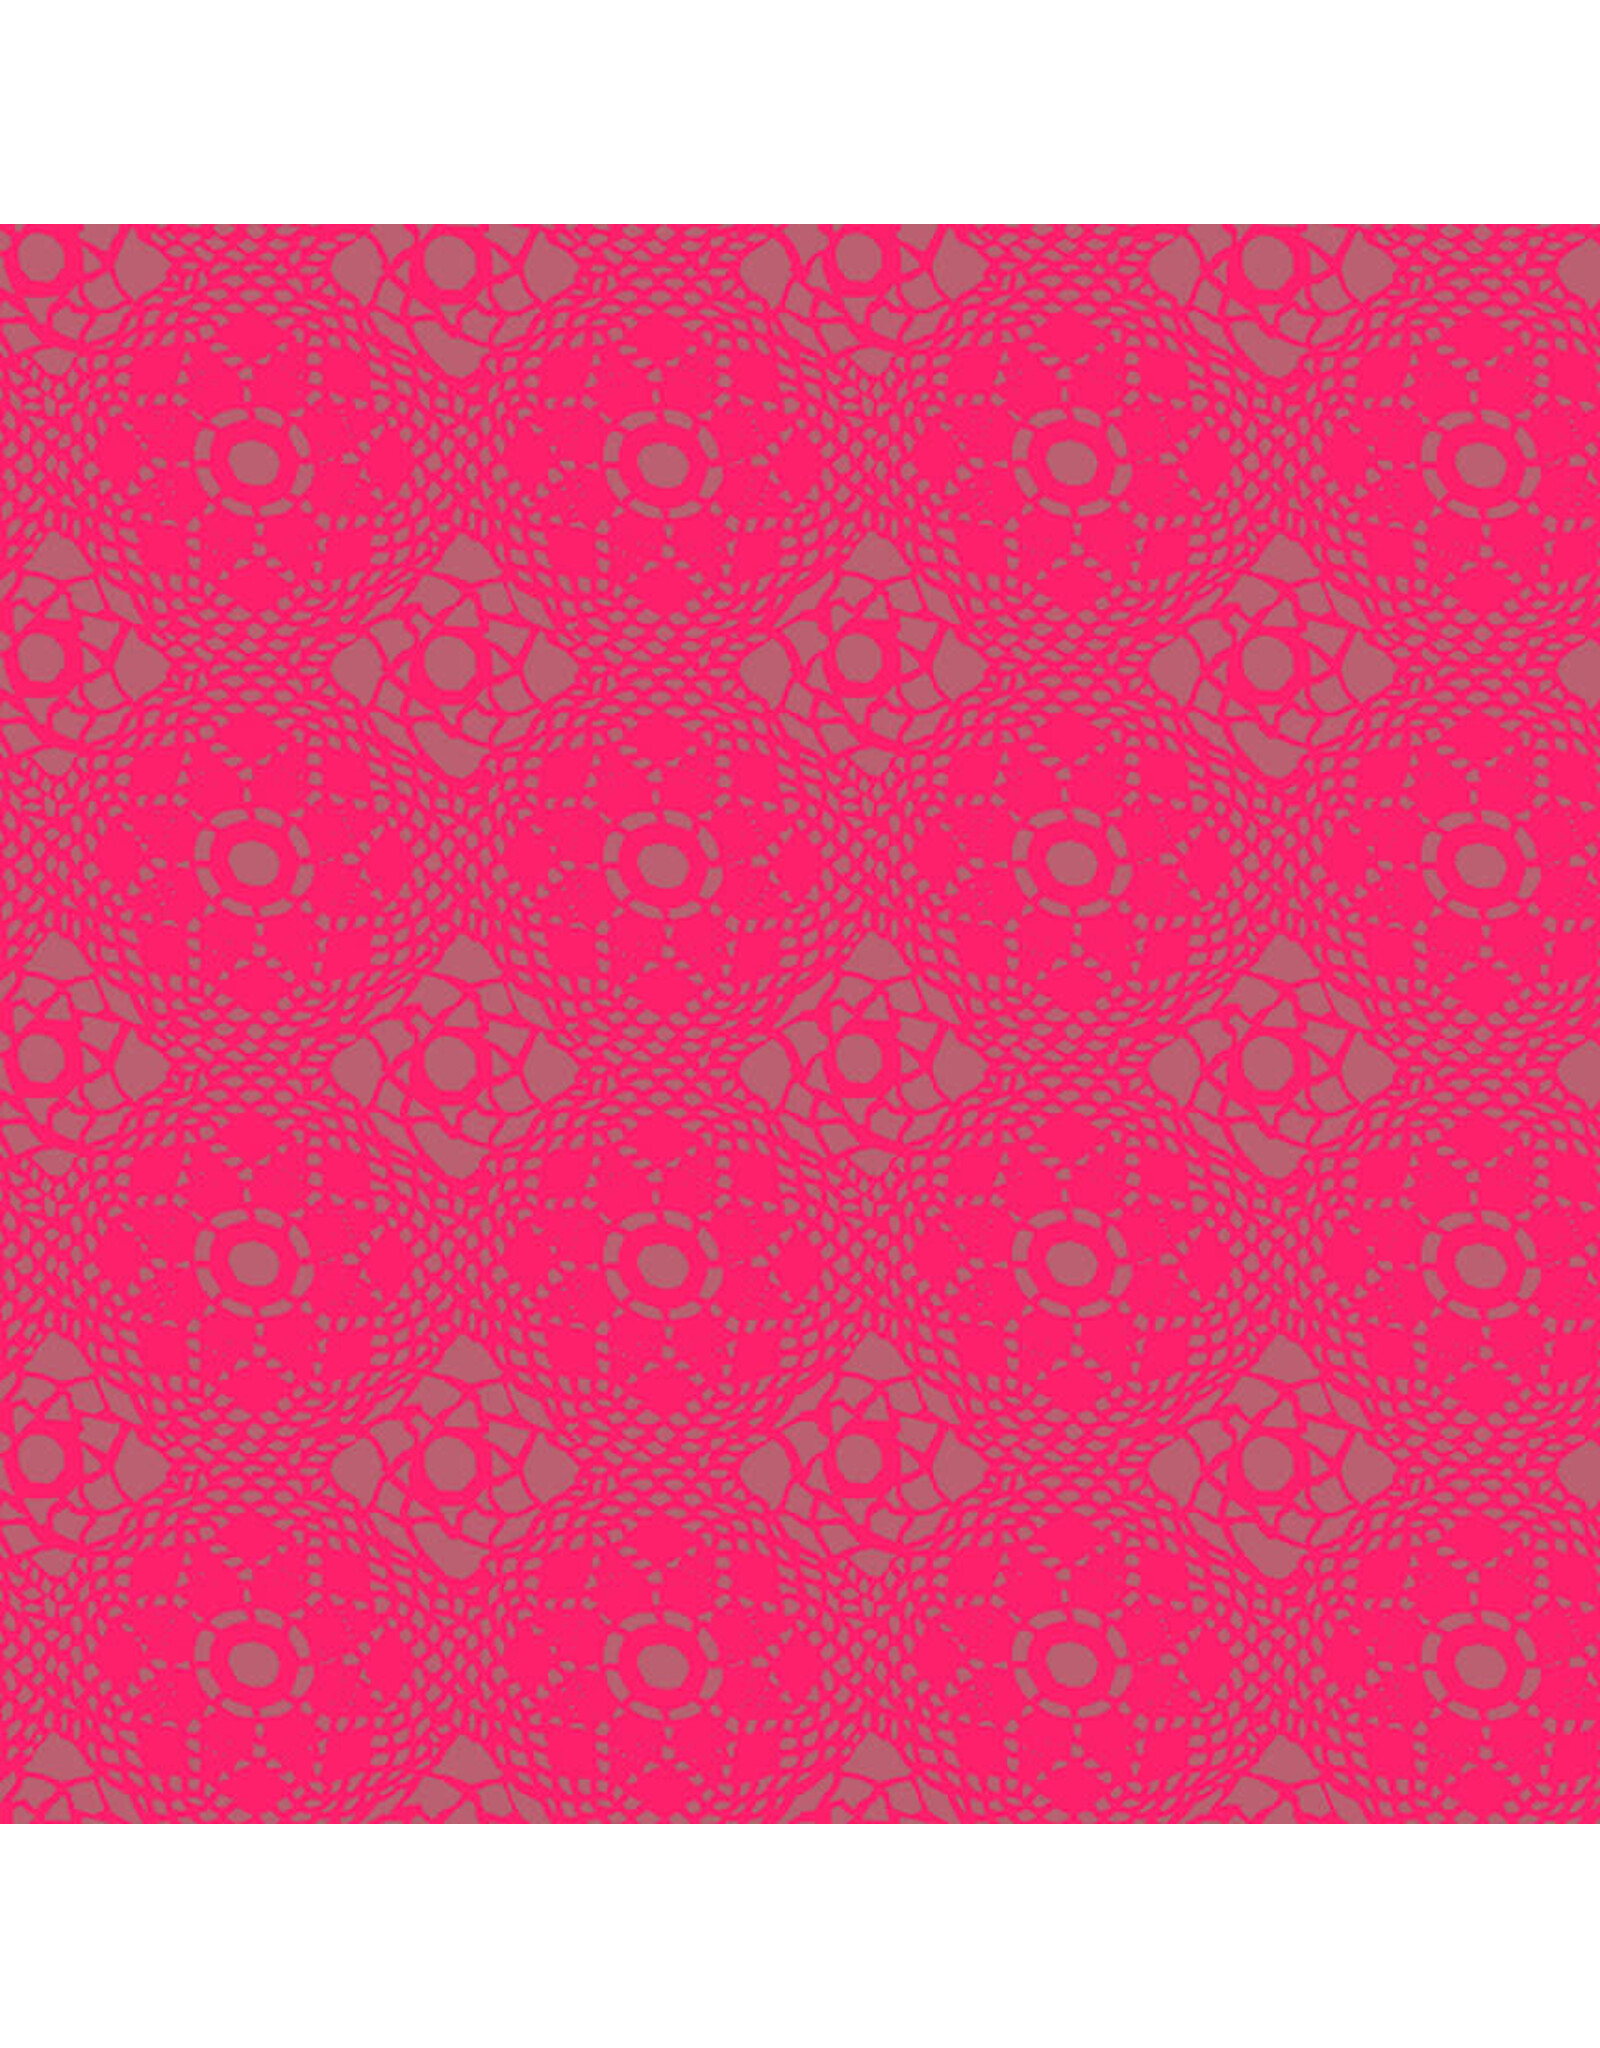 Andover Sun Print 2021 - Crochet Strawberry coupon (± 64 x 110 cm)